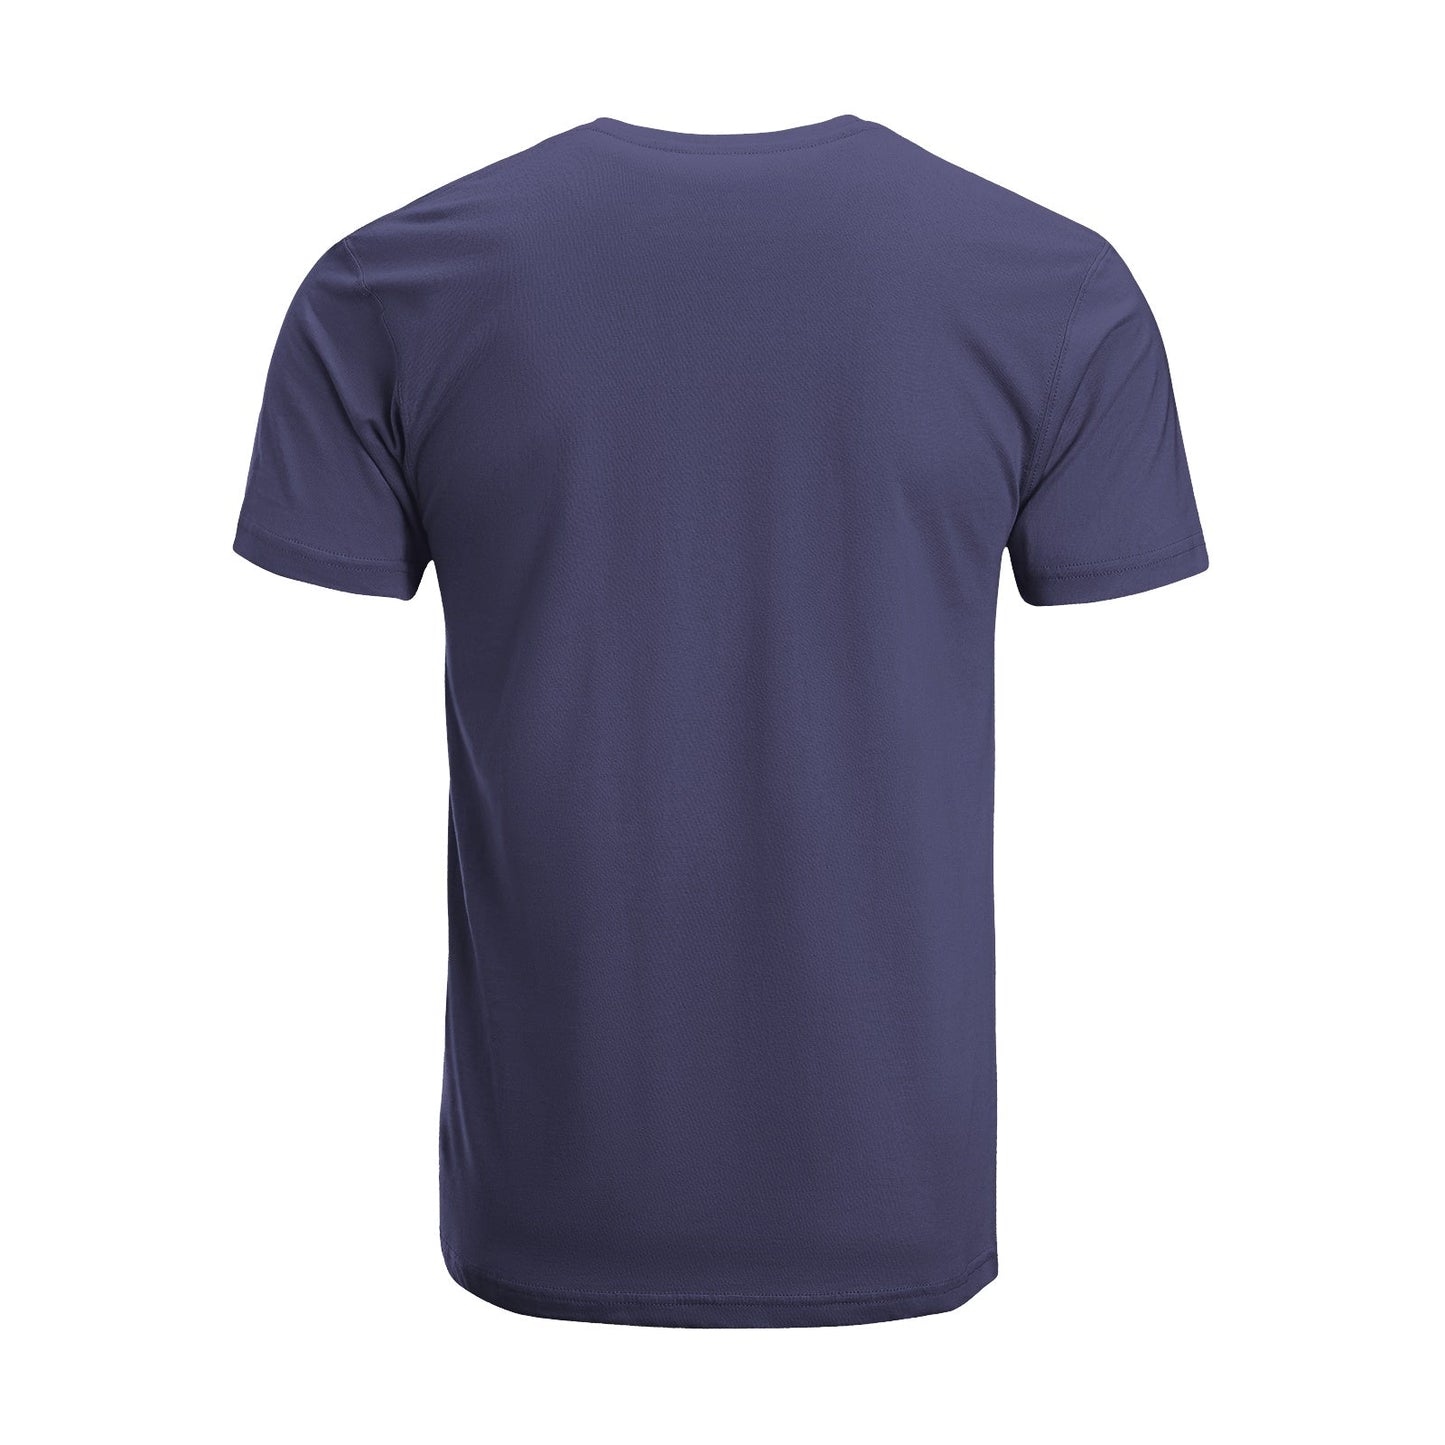 Unisex Short Sleeve Crew Neck Cotton Jersey T-Shirt VEGAN 09